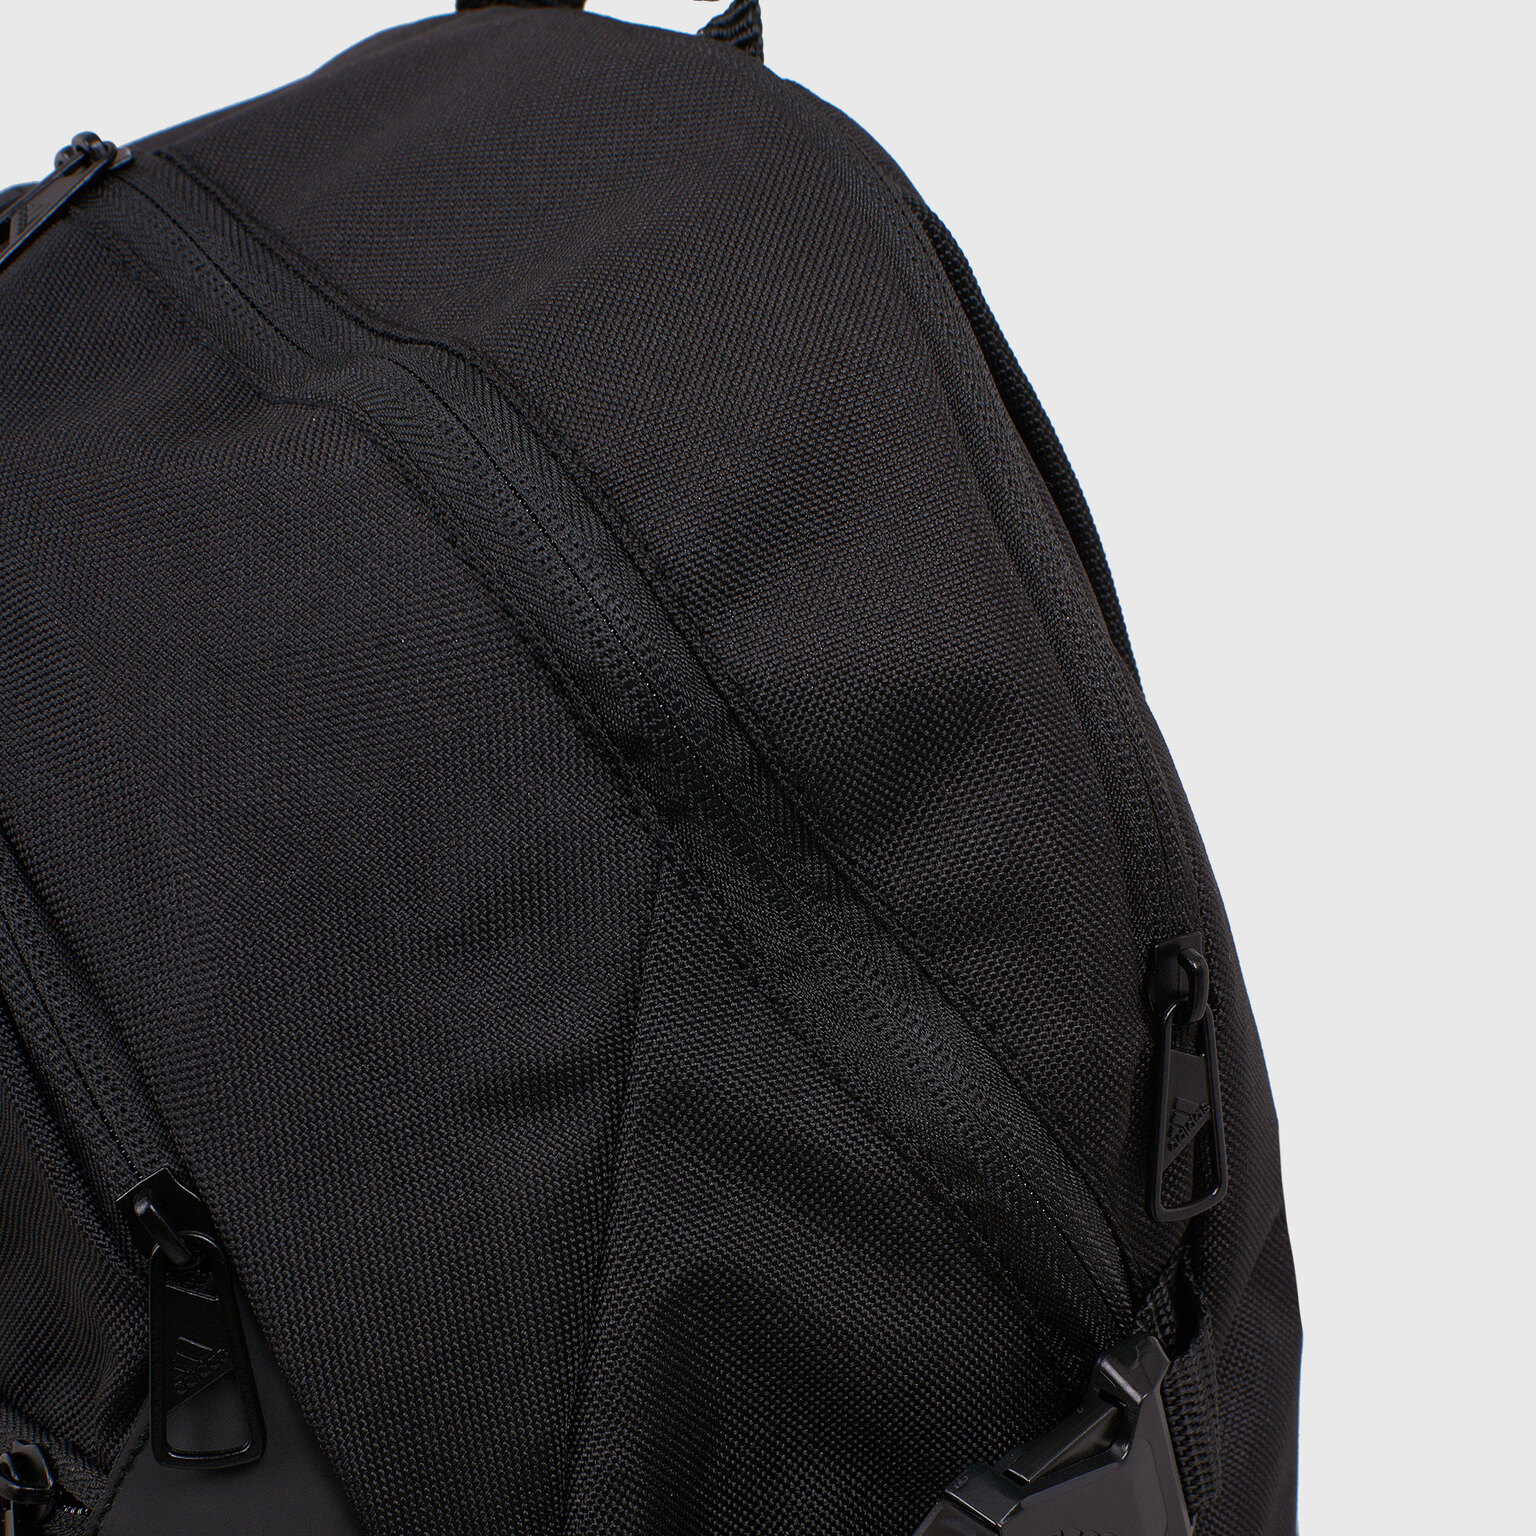 Рюкзак Adidas Tiro Backpack GH7259